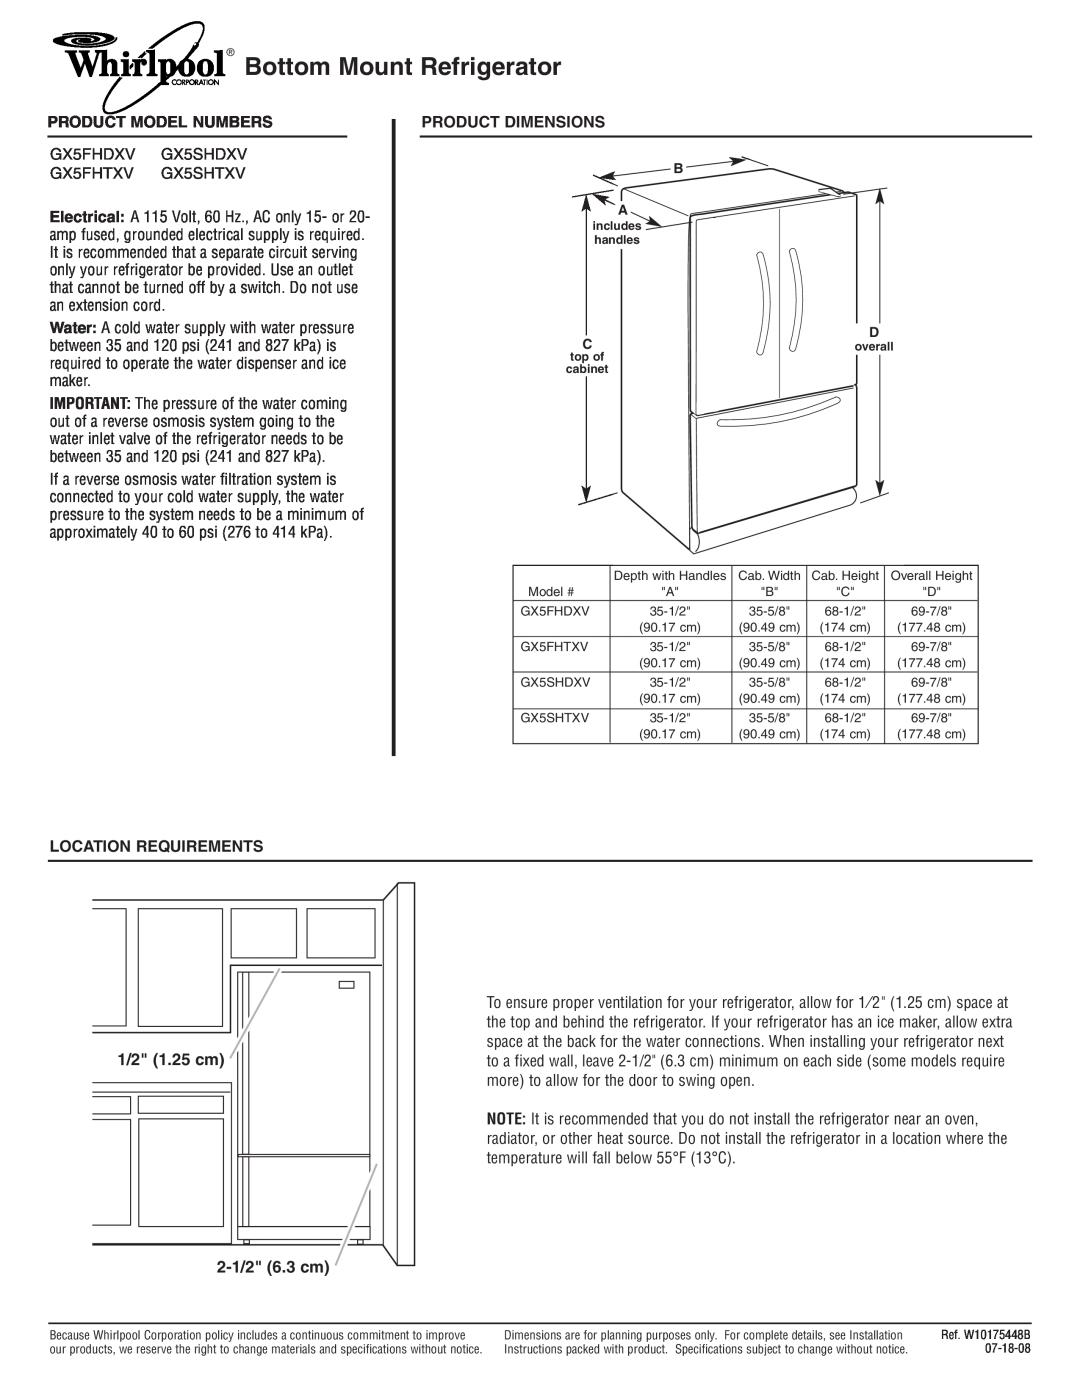 Whirlpool GX5SHTXV, GX5FHTXV dimensions Bottom Mount Refrigerator, 1/2 1.25 cm, 2-1/2 6.3 cm, Product Model Numbers 